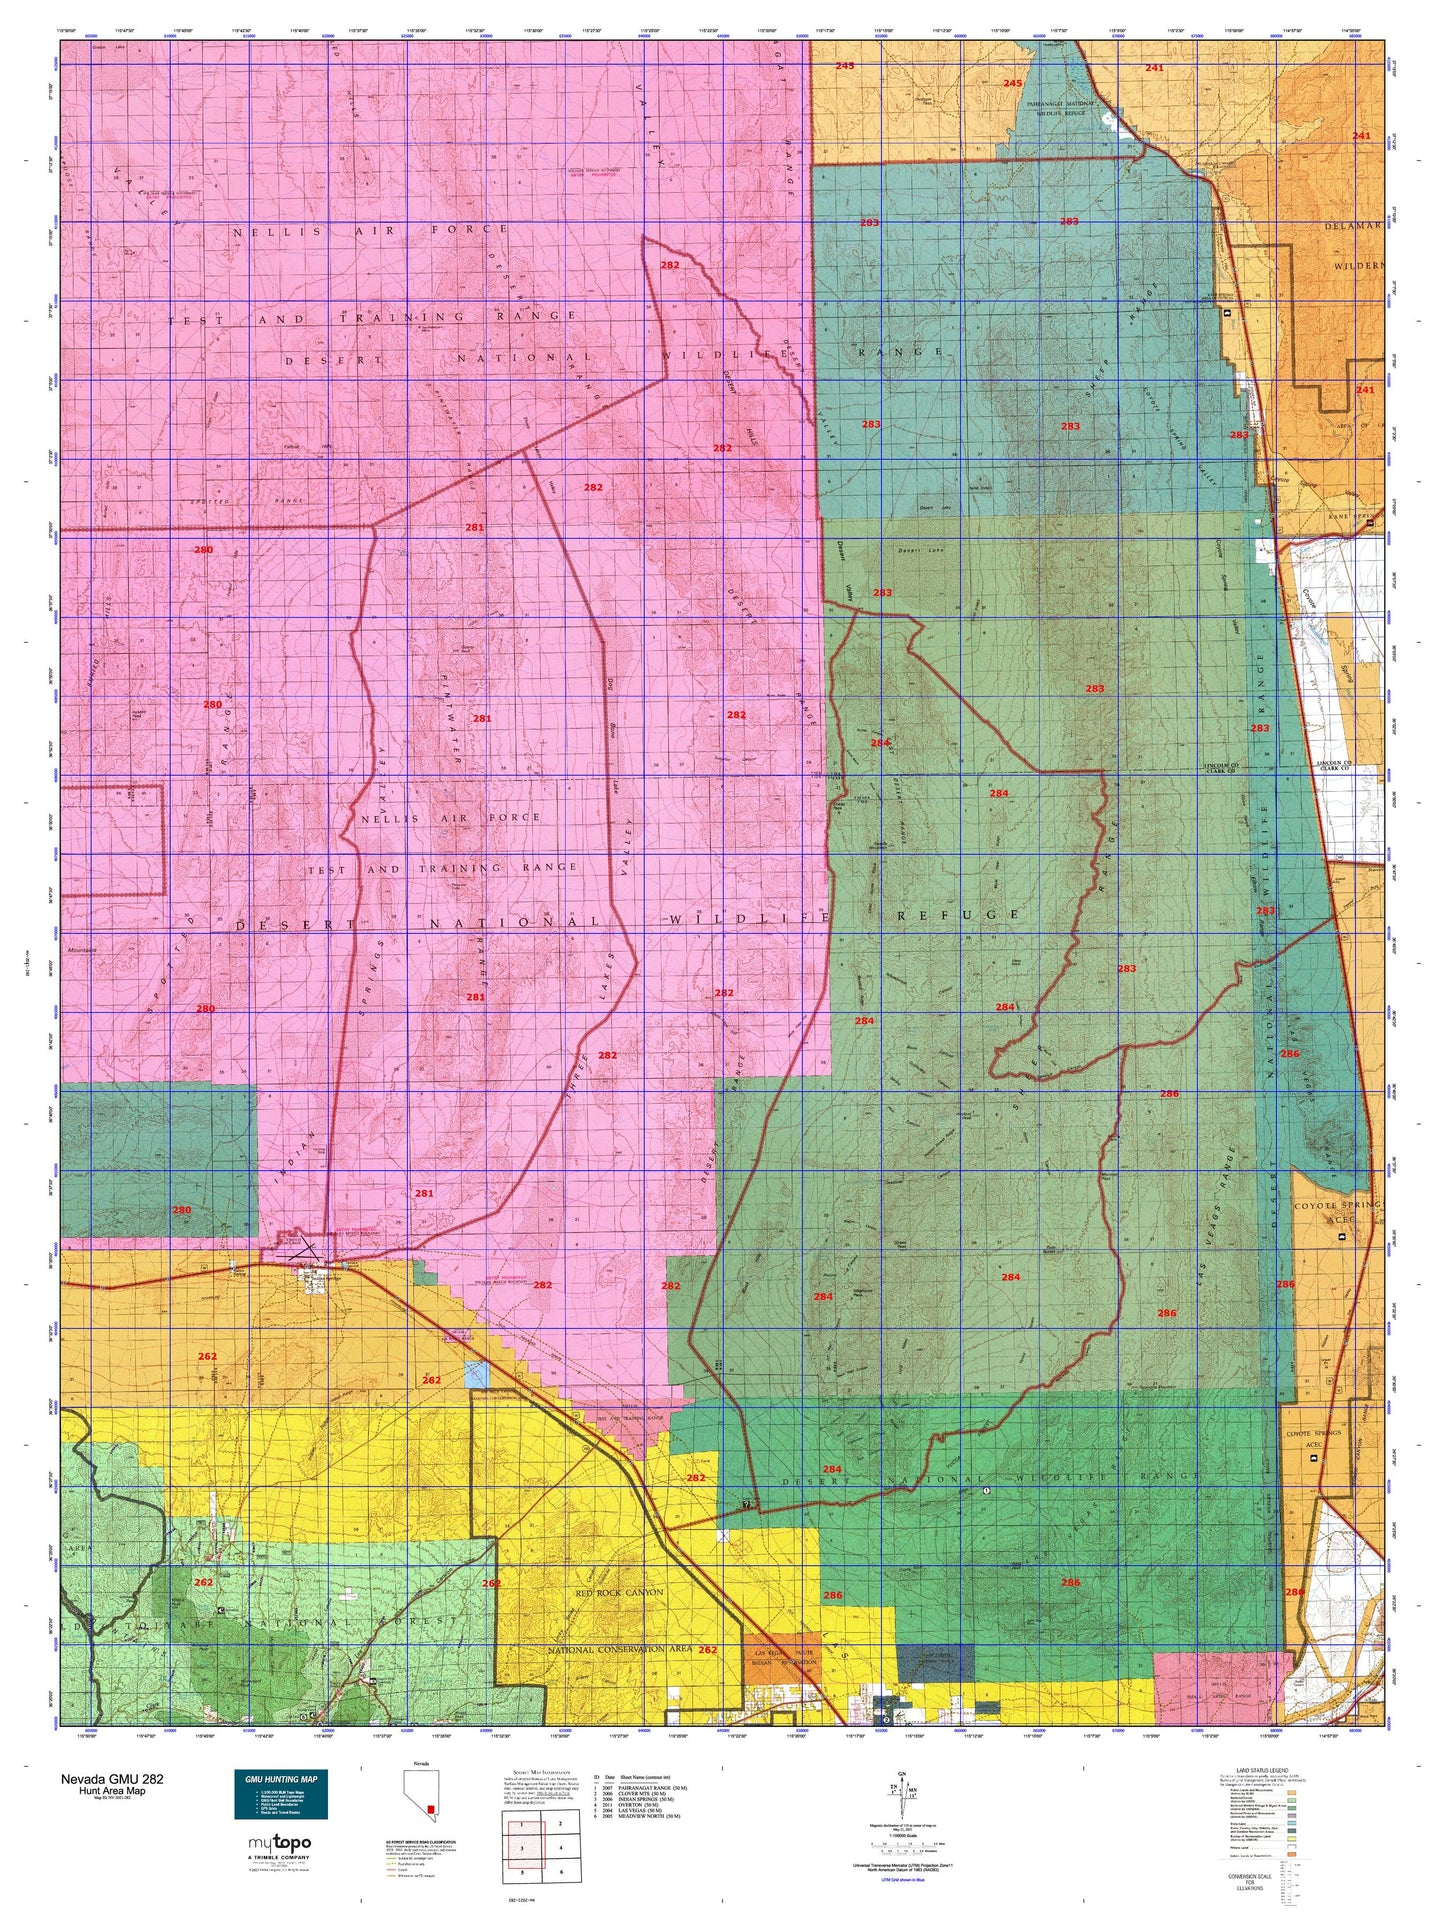 Nevada GMU 282 Map Image